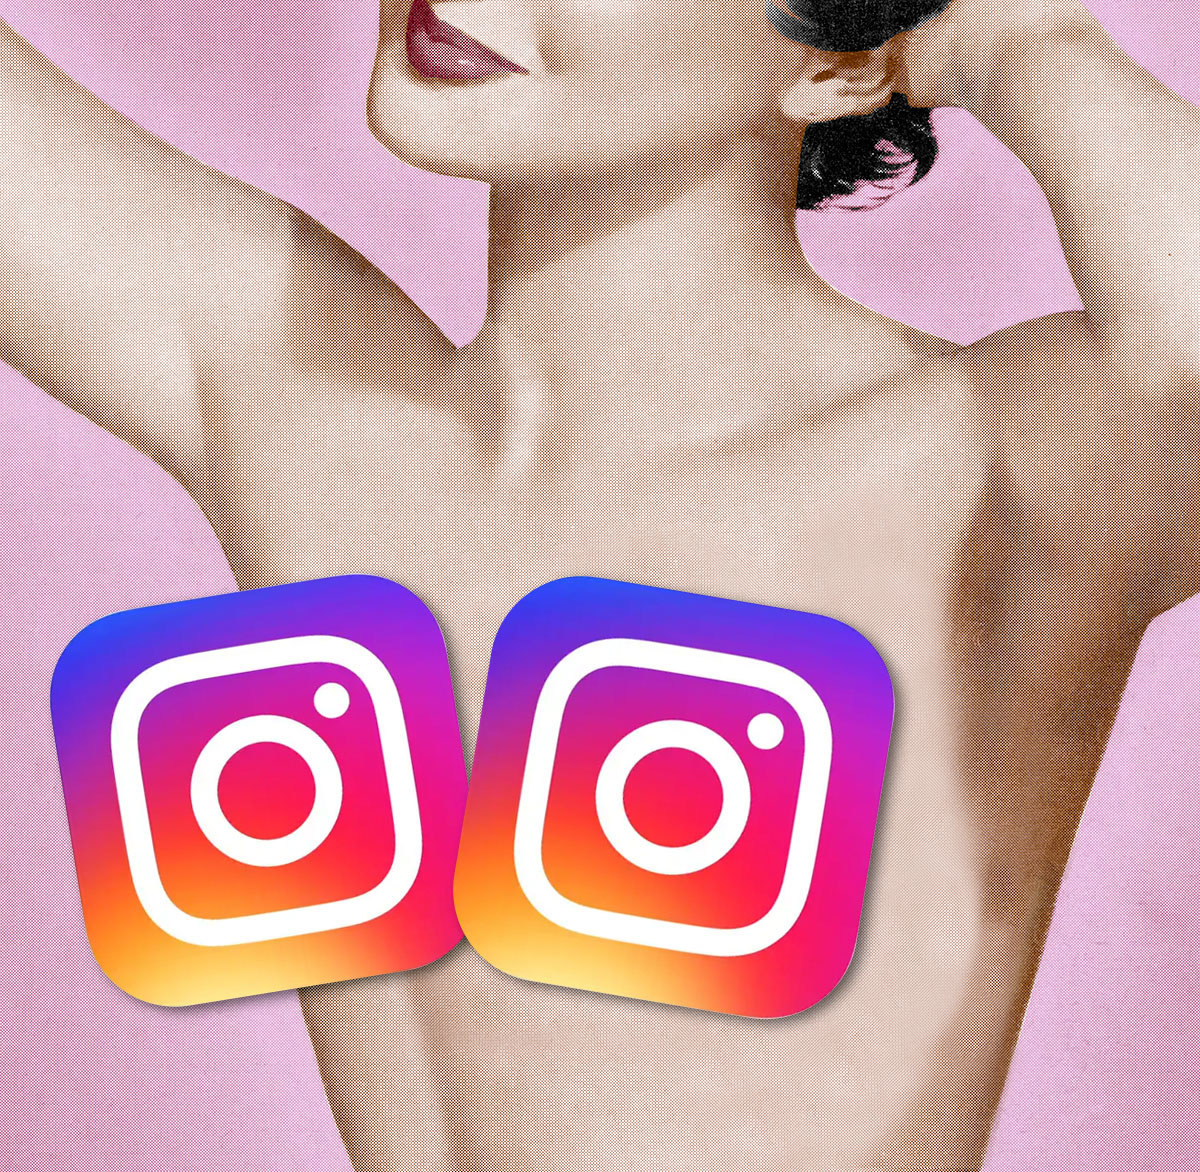 Porn Accounts On Instagram.